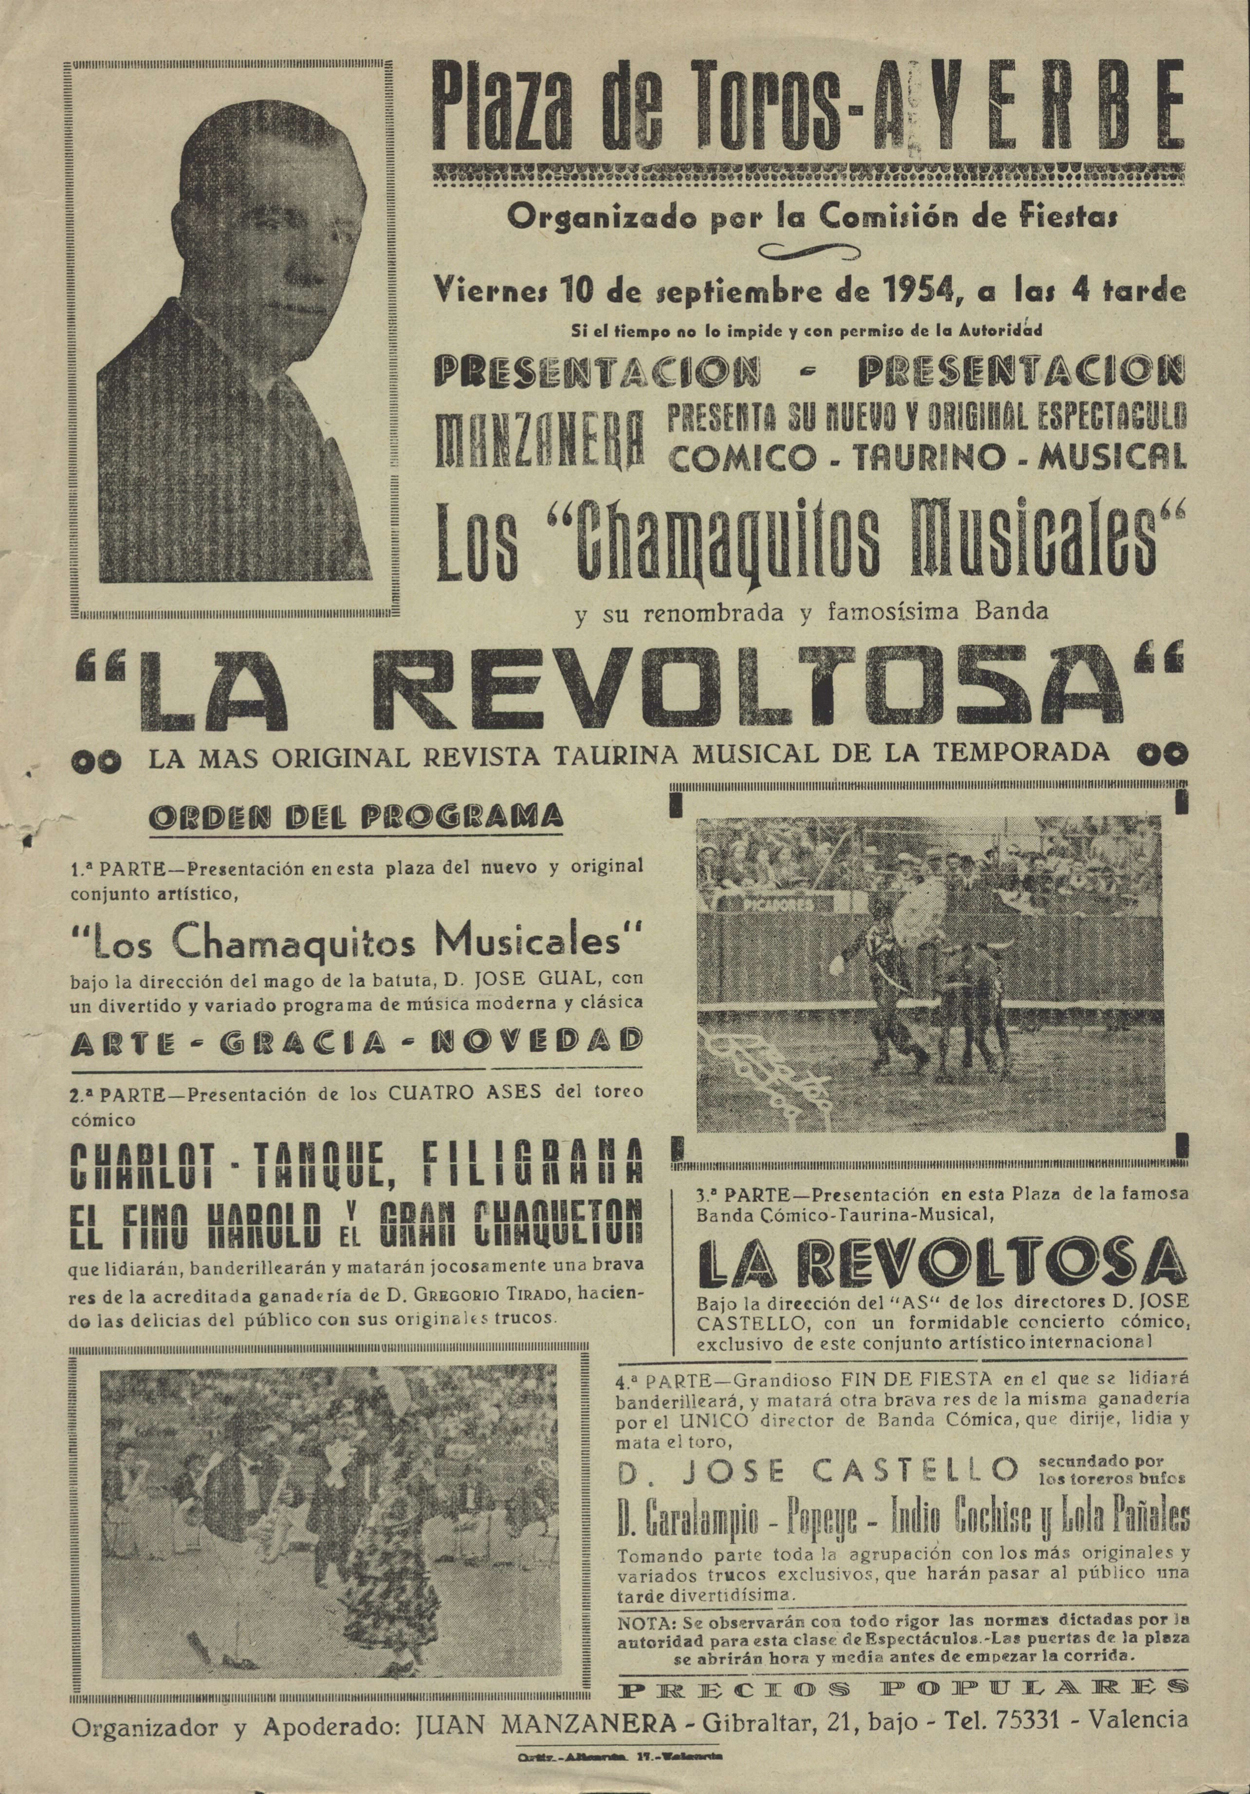 Cartel del espectáculo taurino musical “La Revoltosa”.